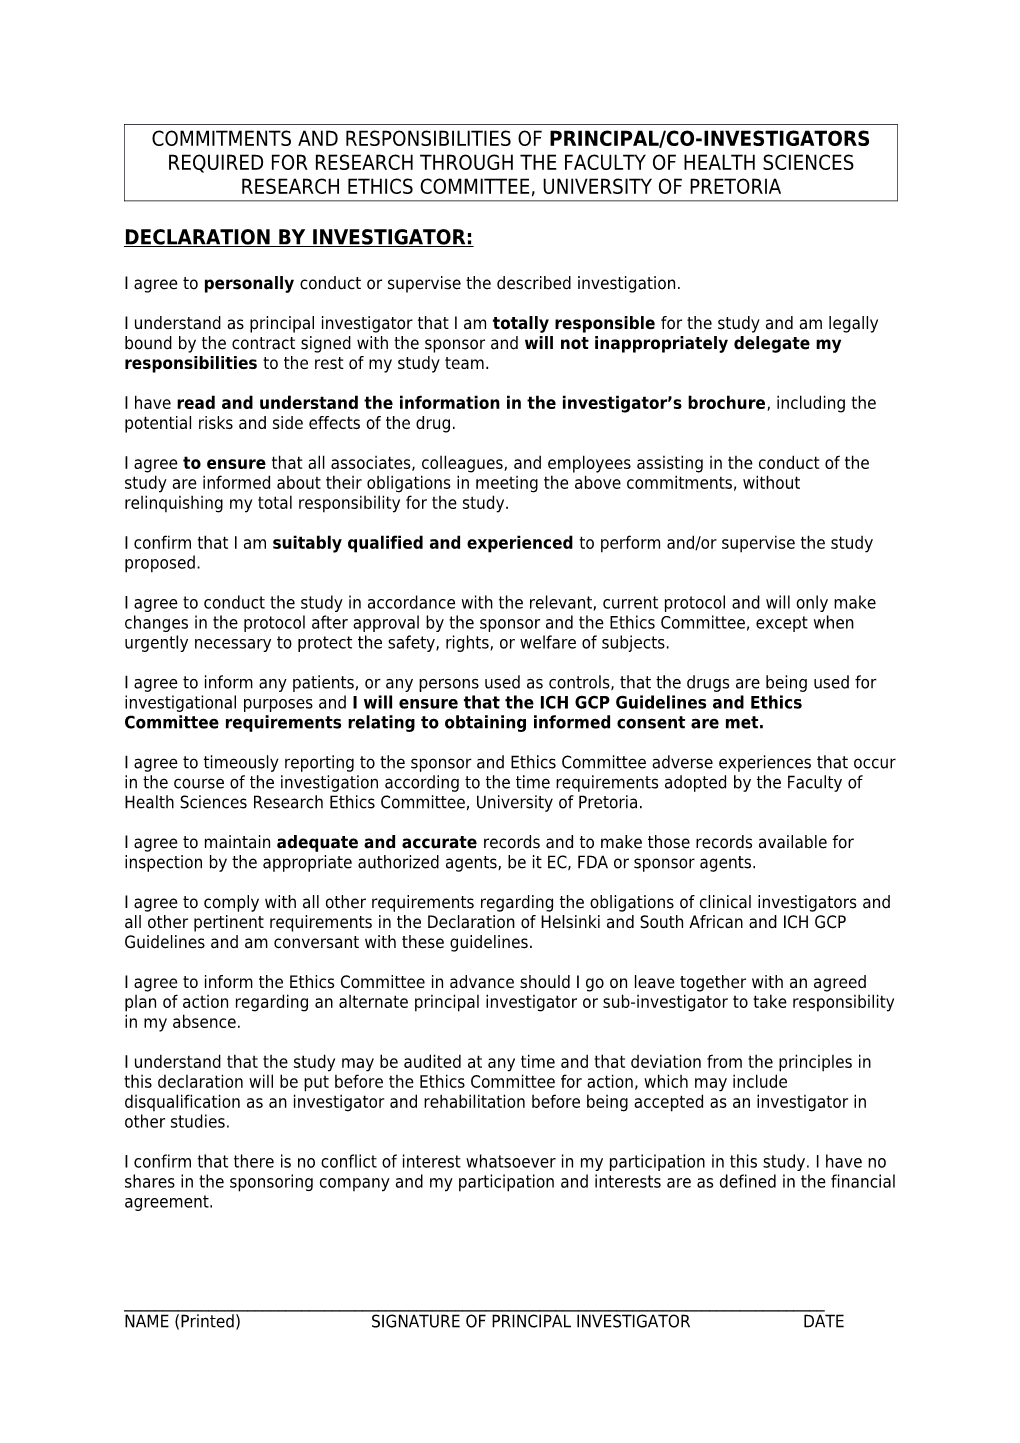 Commitments and Responsibilities of Principal/Co-Investigators